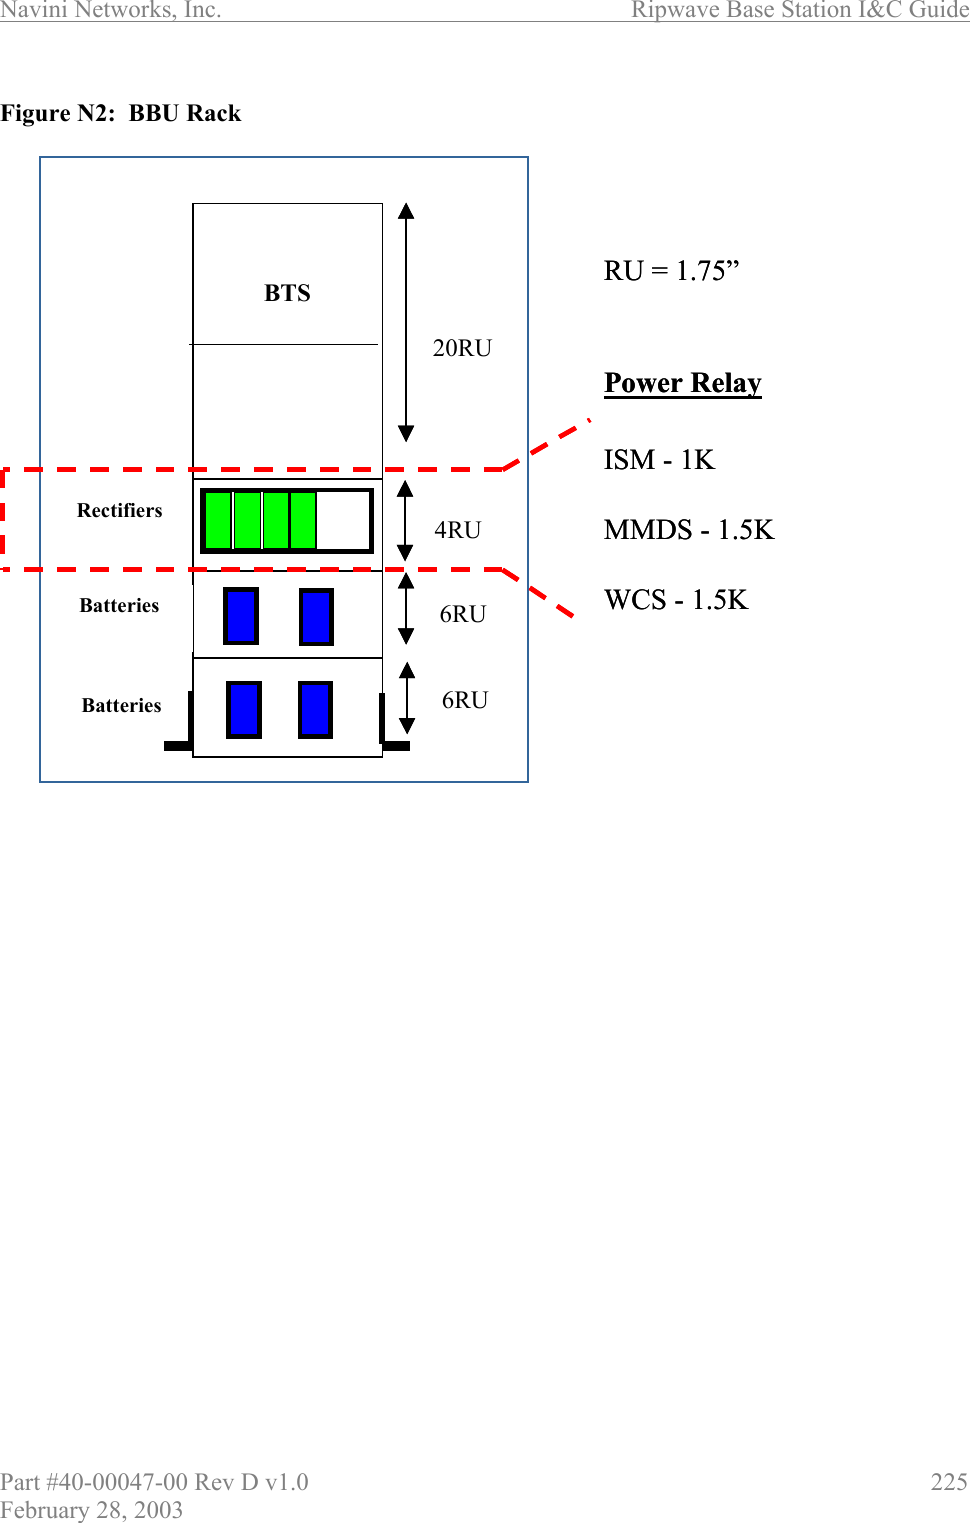 Navini Networks, Inc.                          Ripwave Base Station I&amp;C Guide Part #40-00047-00 Rev D v1.0                     225 February 28, 2003  Figure N2:  BBU Rack                           BTSRectifiersBatteriesBatteries4RU6RU6RU20RUISM - 1KMMDS - 1.5KWCS - 1.5KPower RelayRU = 1.75”BTSRectifiersBatteriesBatteries4RU6RU6RU20RUISM - 1KMMDS - 1.5KWCS - 1.5KPower RelayRU = 1.75”